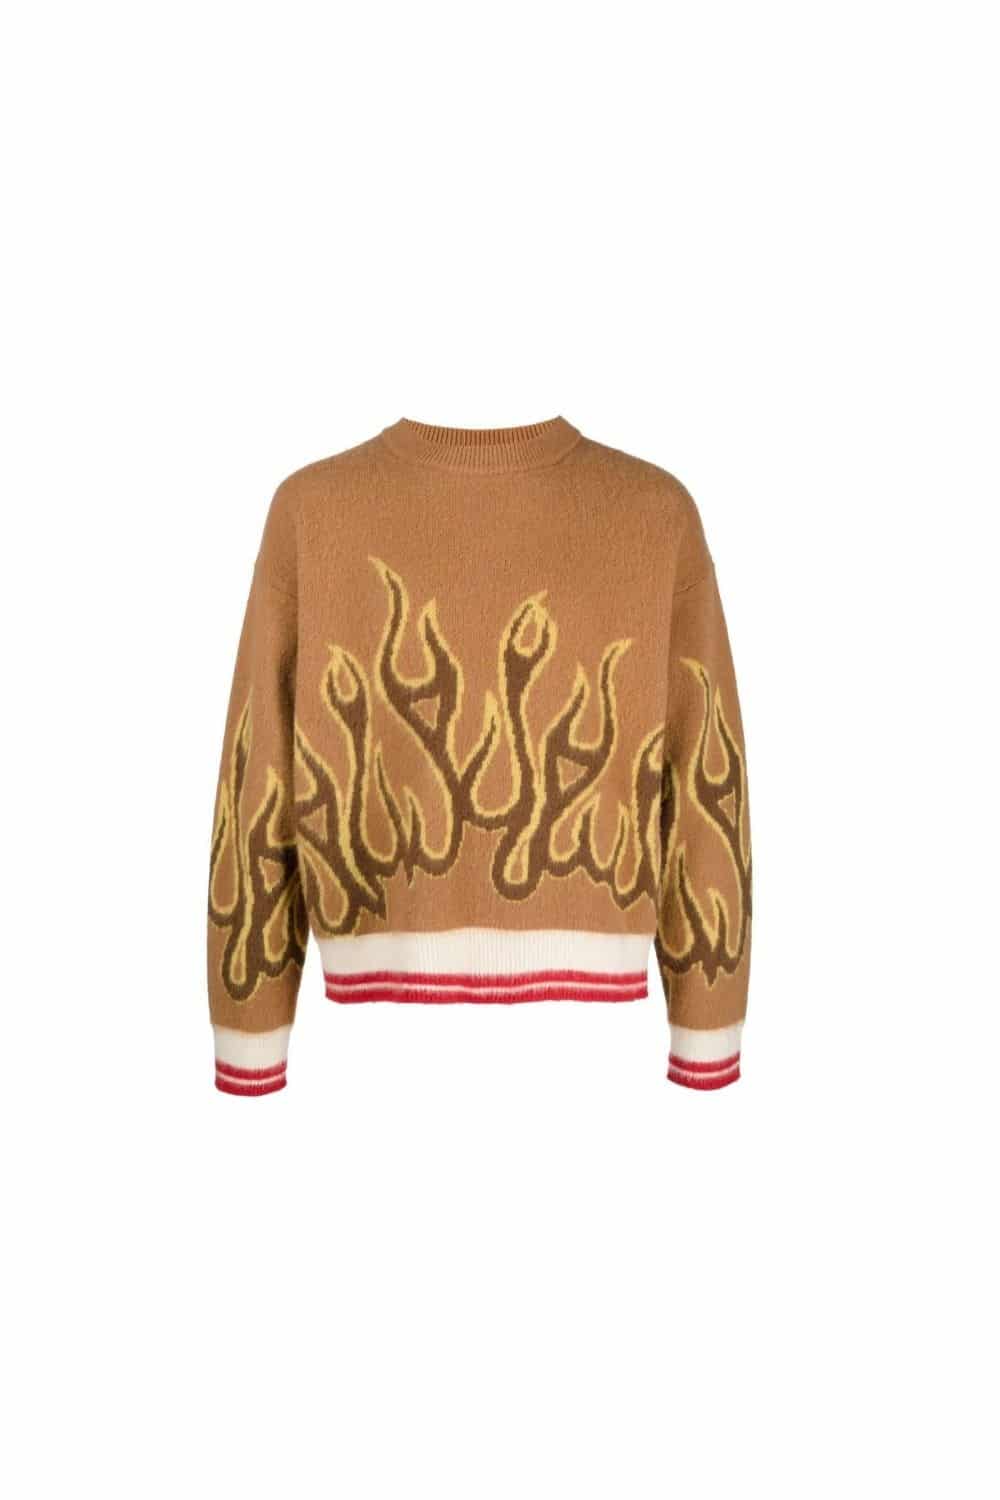 Palm Angels maglione burning in lana vergine